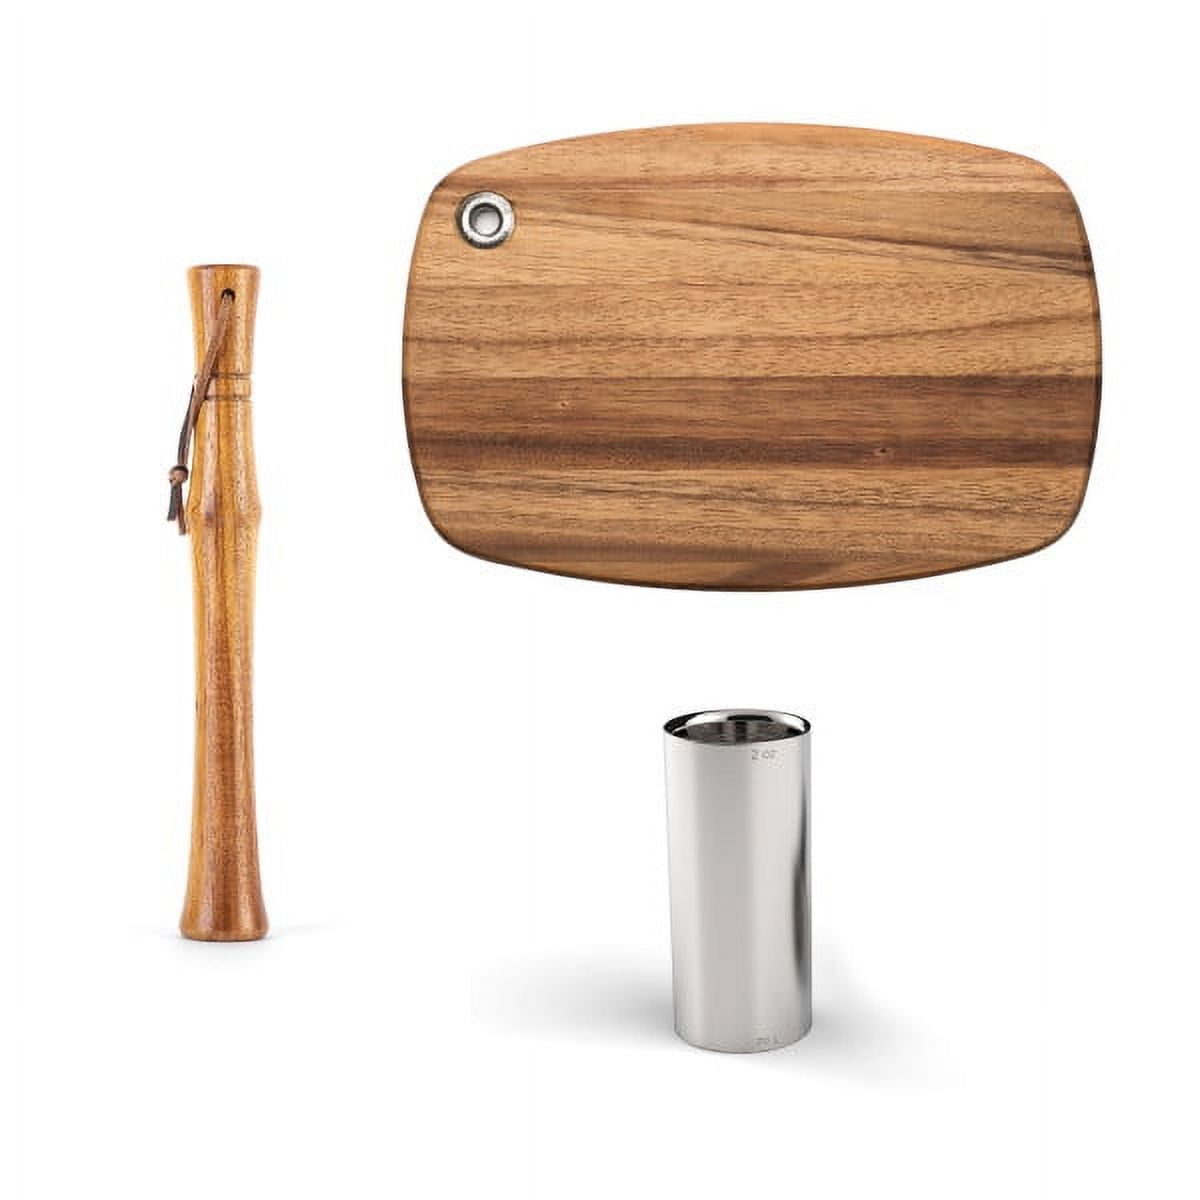 Behind The Bar® Premium Wood Bar Cutting Board & Garnish Tool